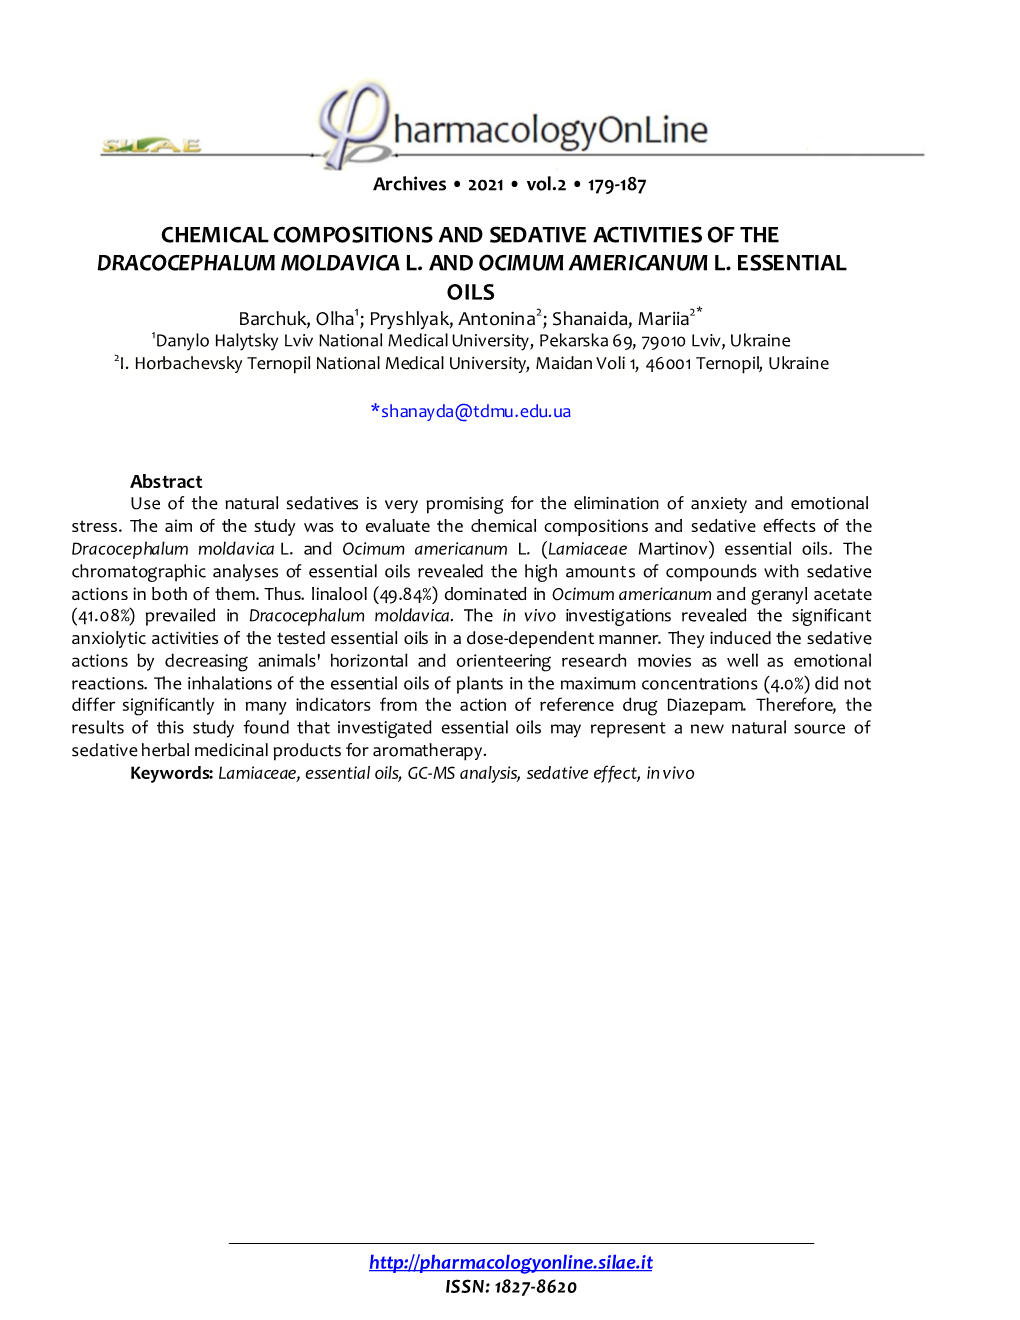 Chemical Compositions and Sedative Activities of the Dracocephalum Moldavica L. and Ocimum Americanum L. Essential Oils